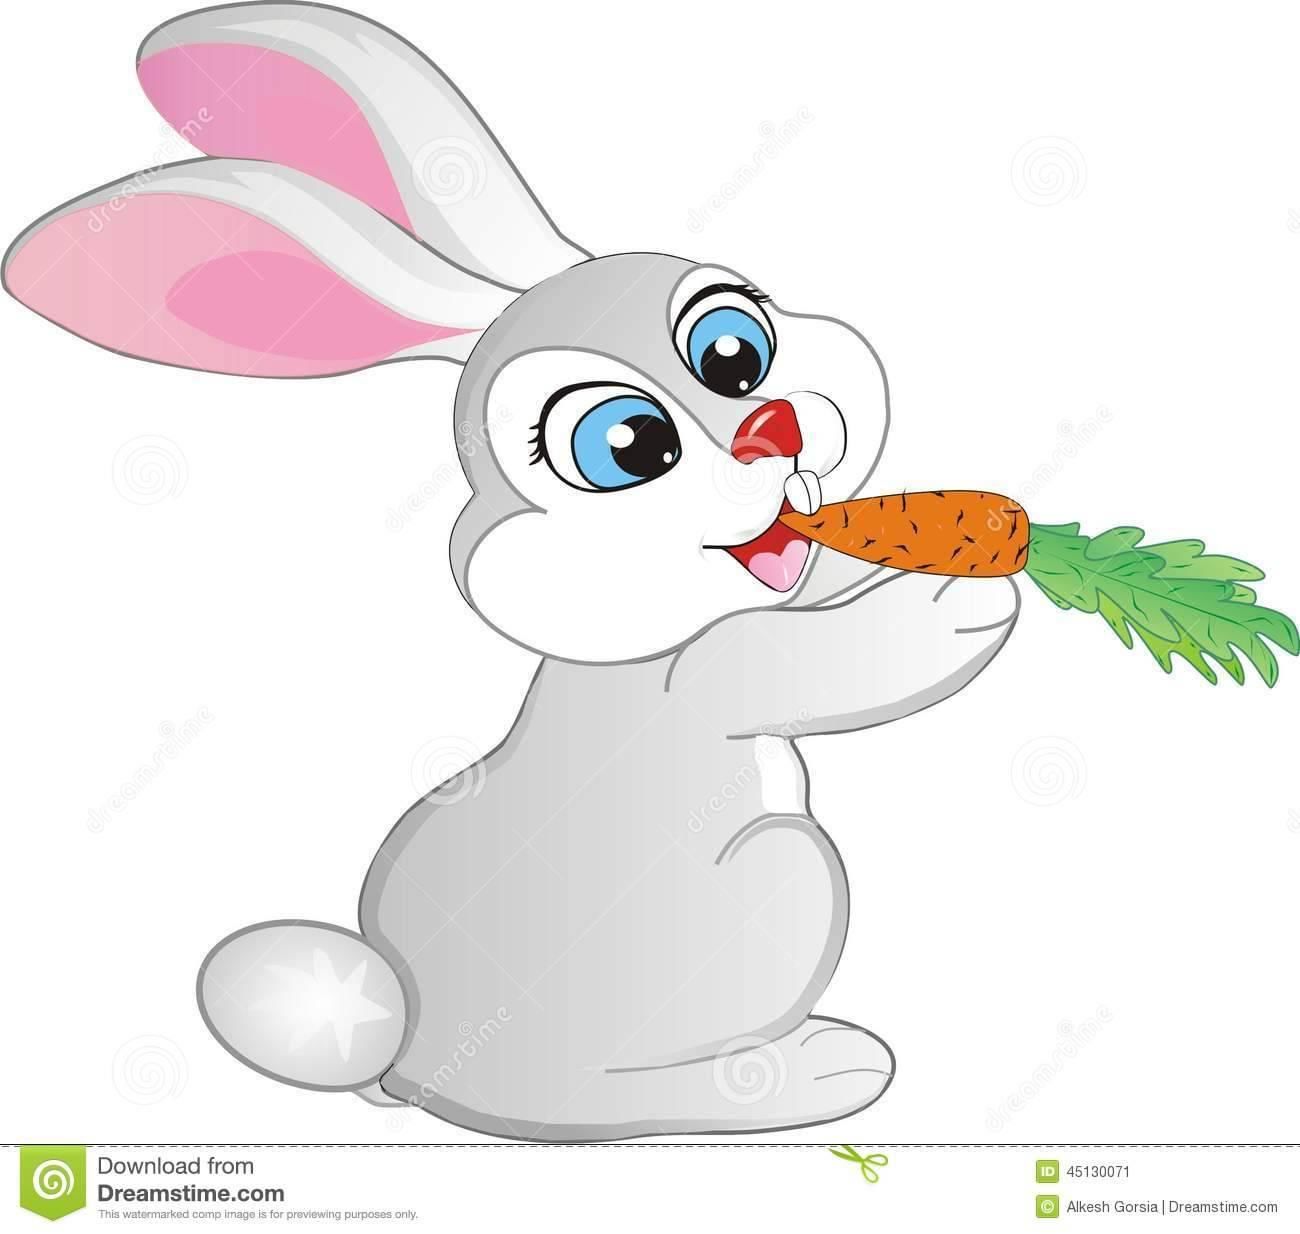 Зайчик ест морковку